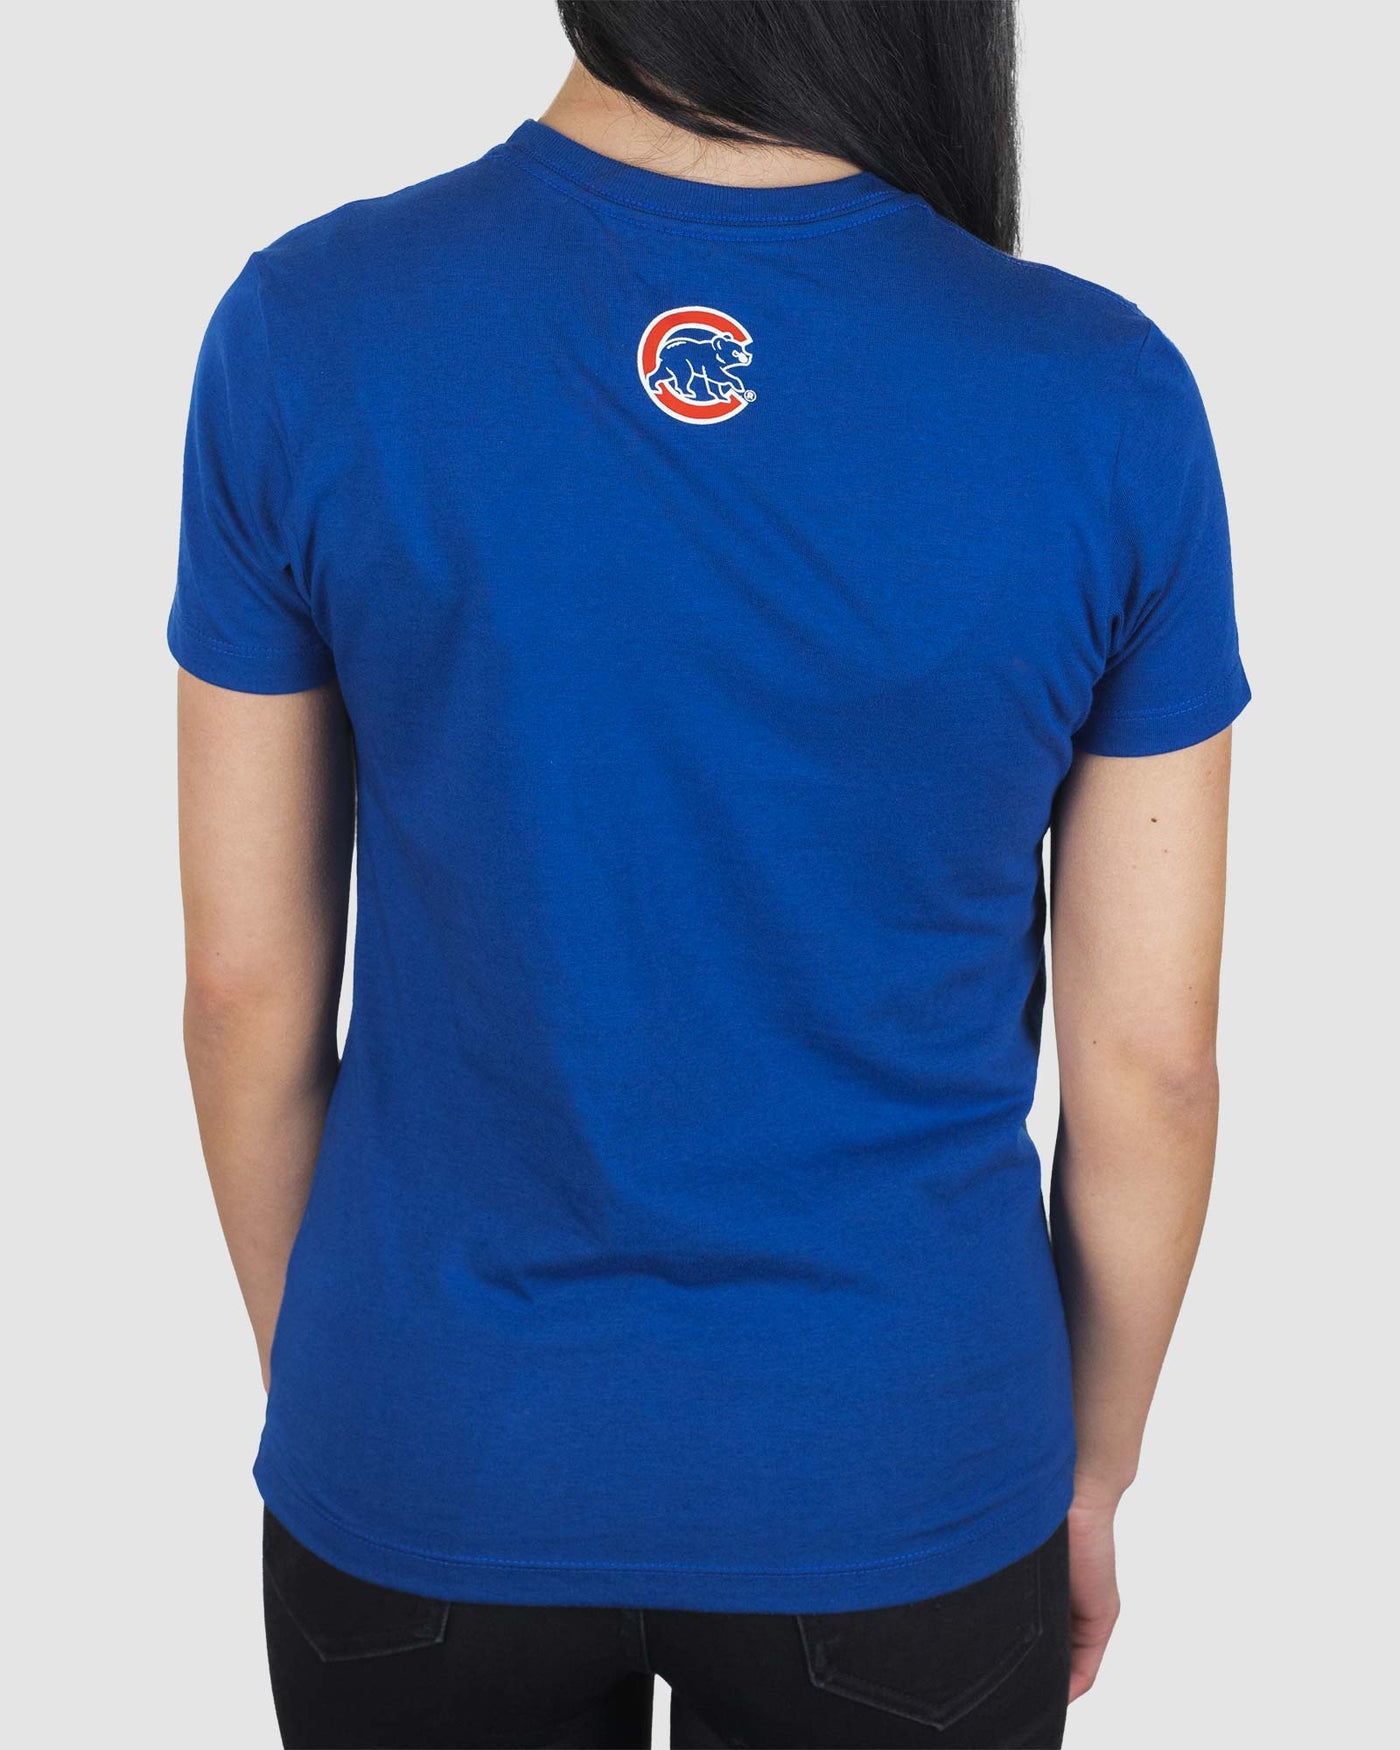 Women's Chicago Cubs Shirts